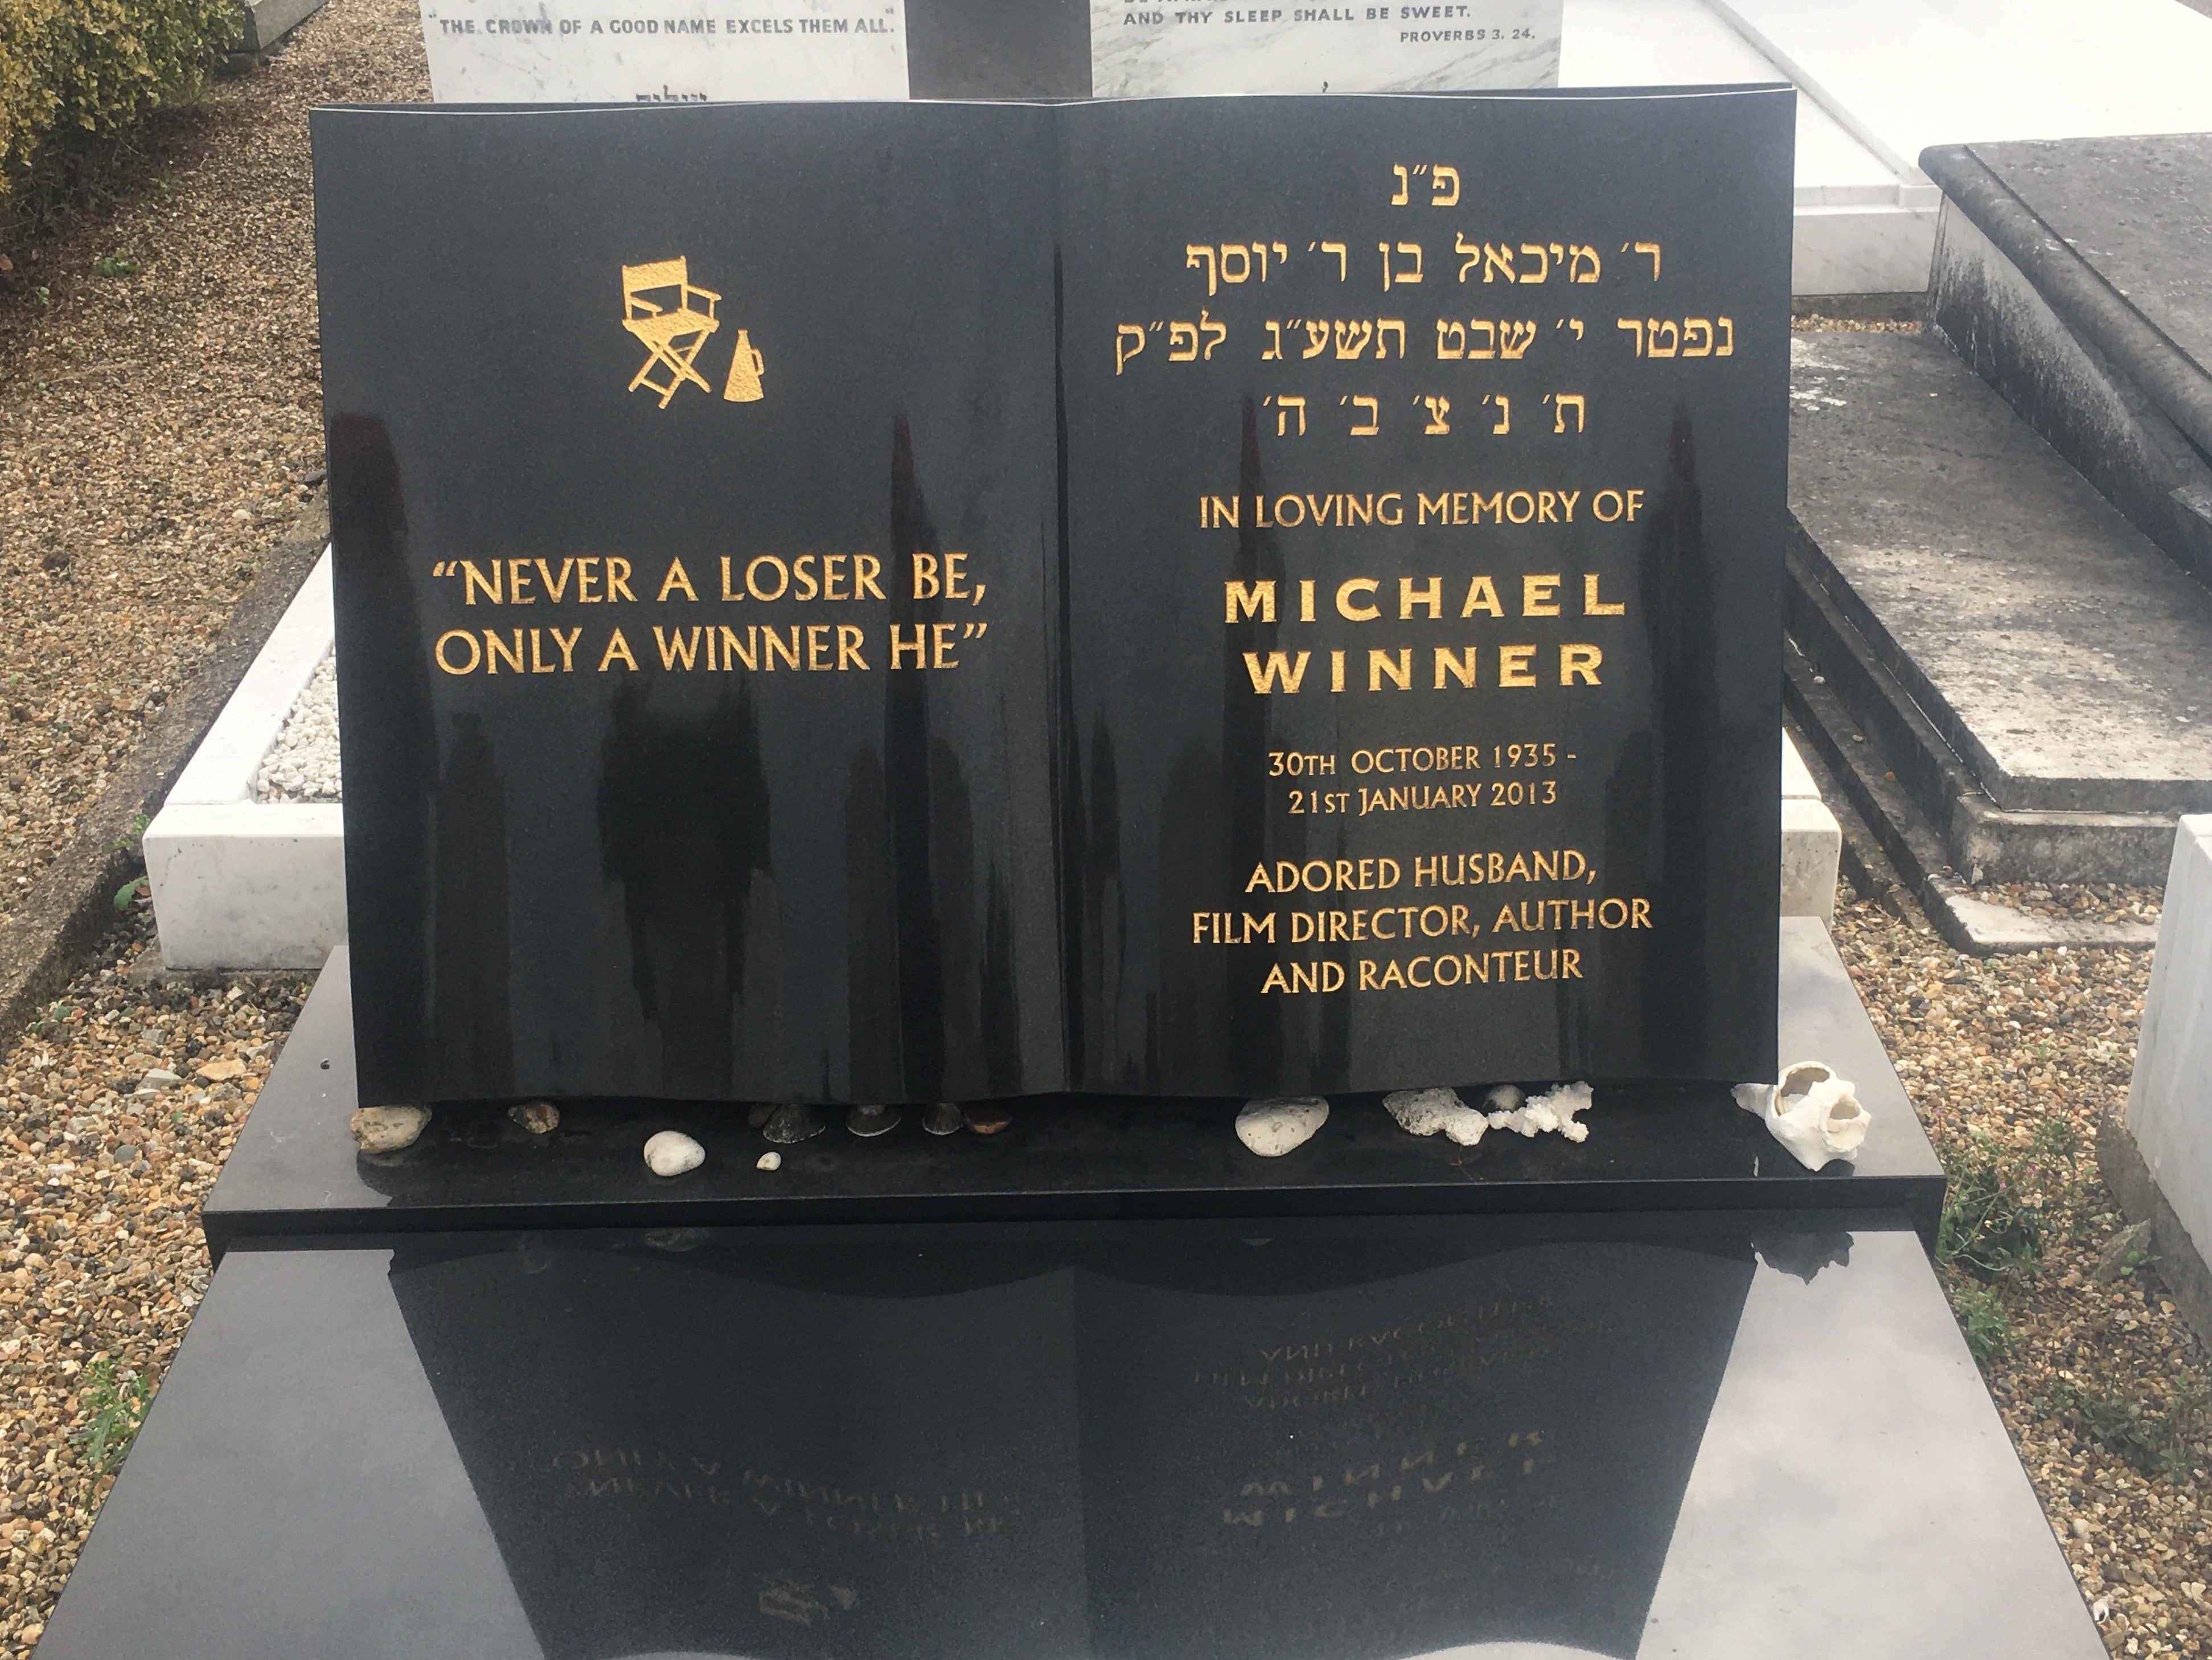 Michael Winner’s striking tombstone